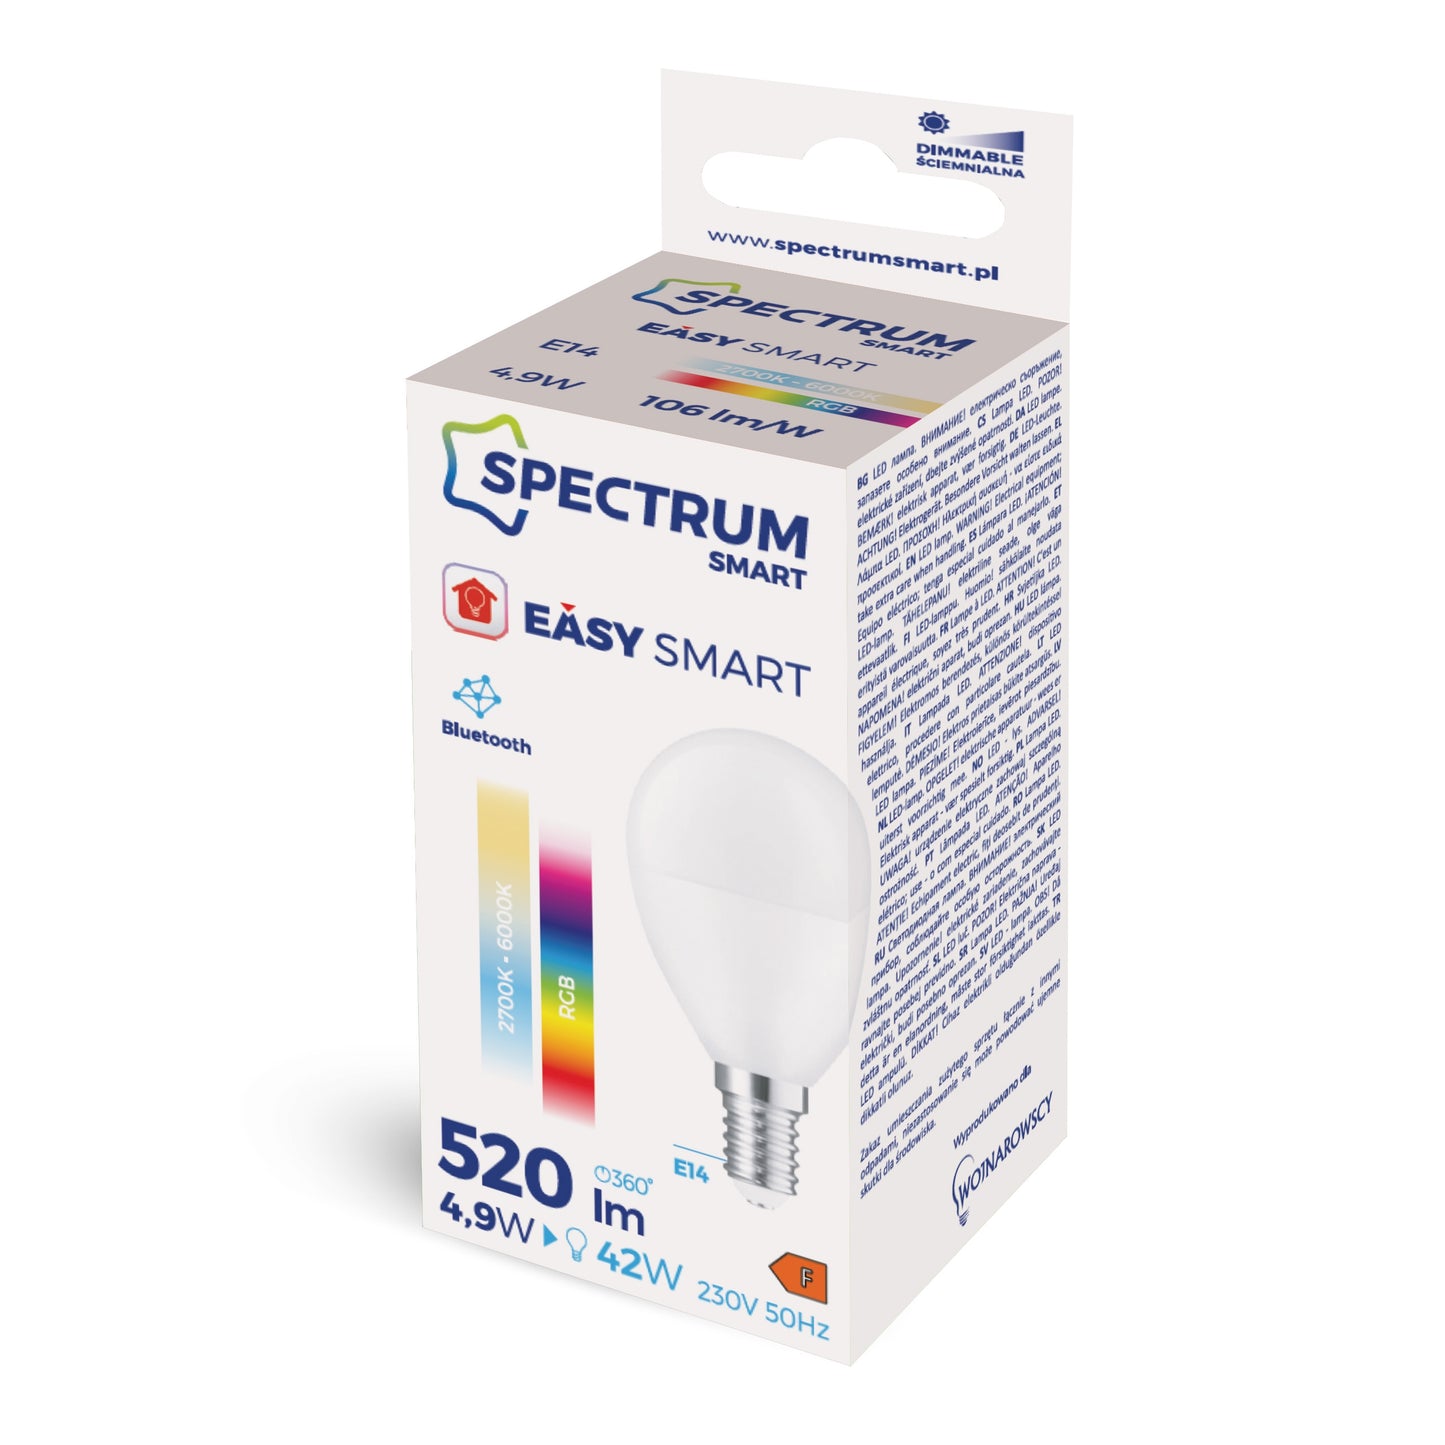 Spectrum LED E14 G45 EASY SMART APP 4,9W = 42W bunt 520lm BLUETOOTH 2700K-6000K DIMMBAR